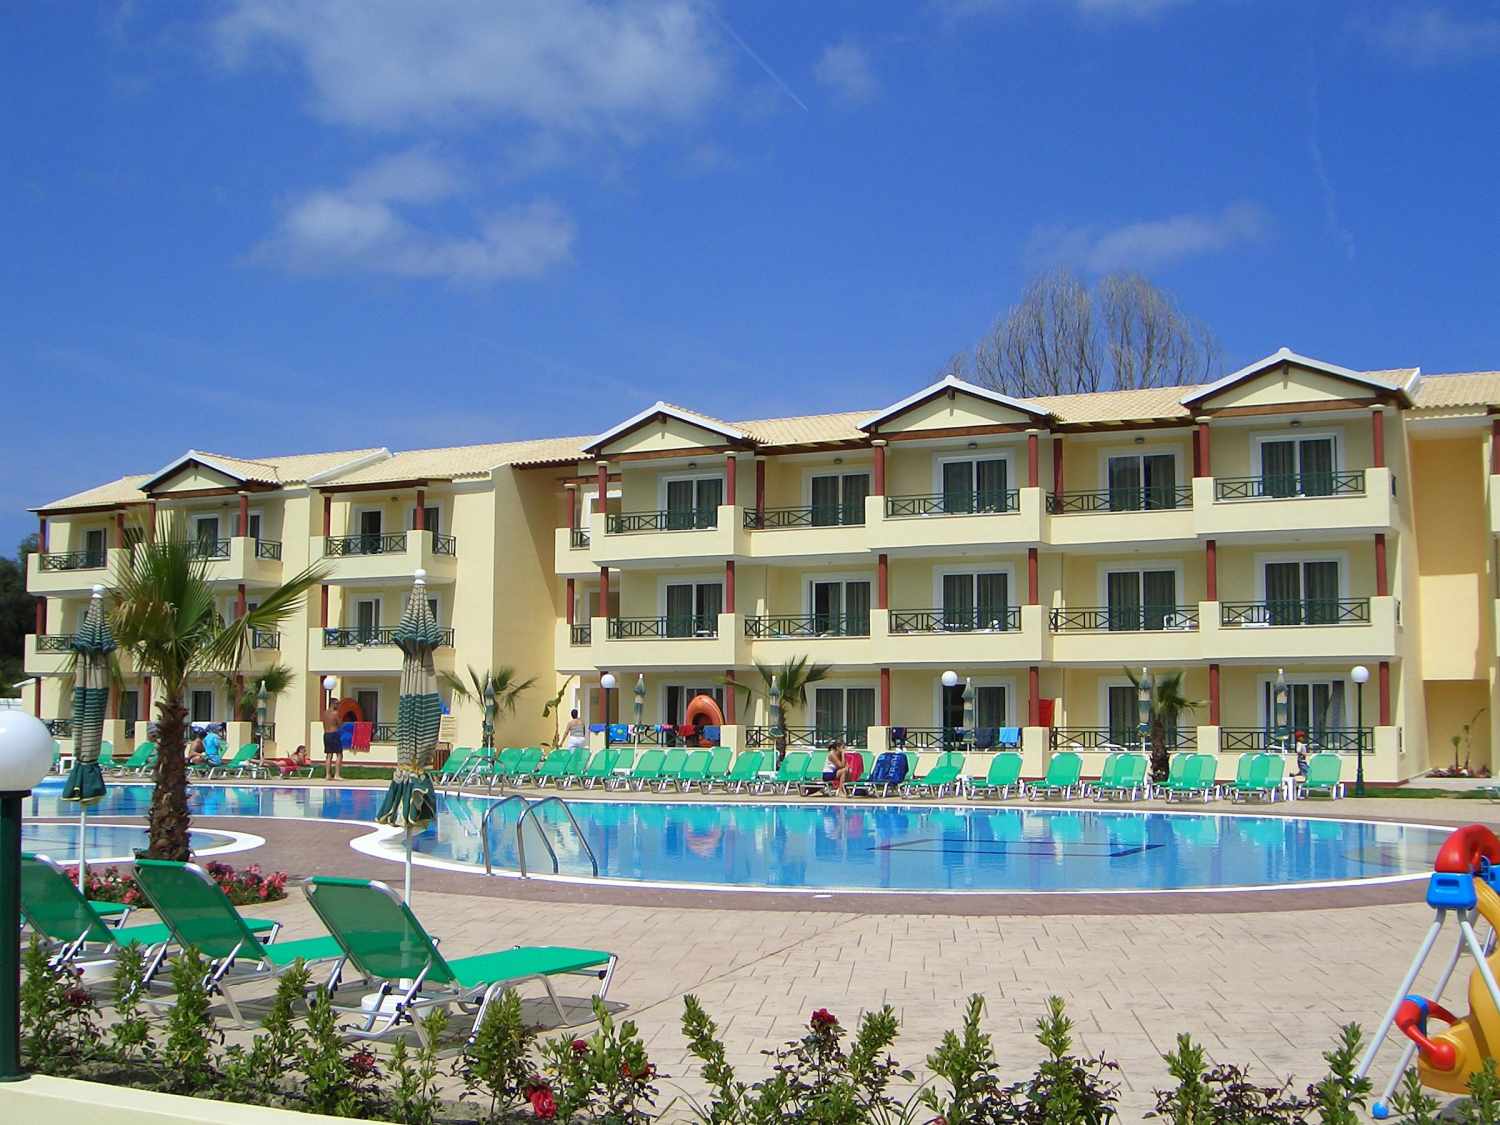 Damia Hotel & Apartments, Sidari, Corfu, Griekenland